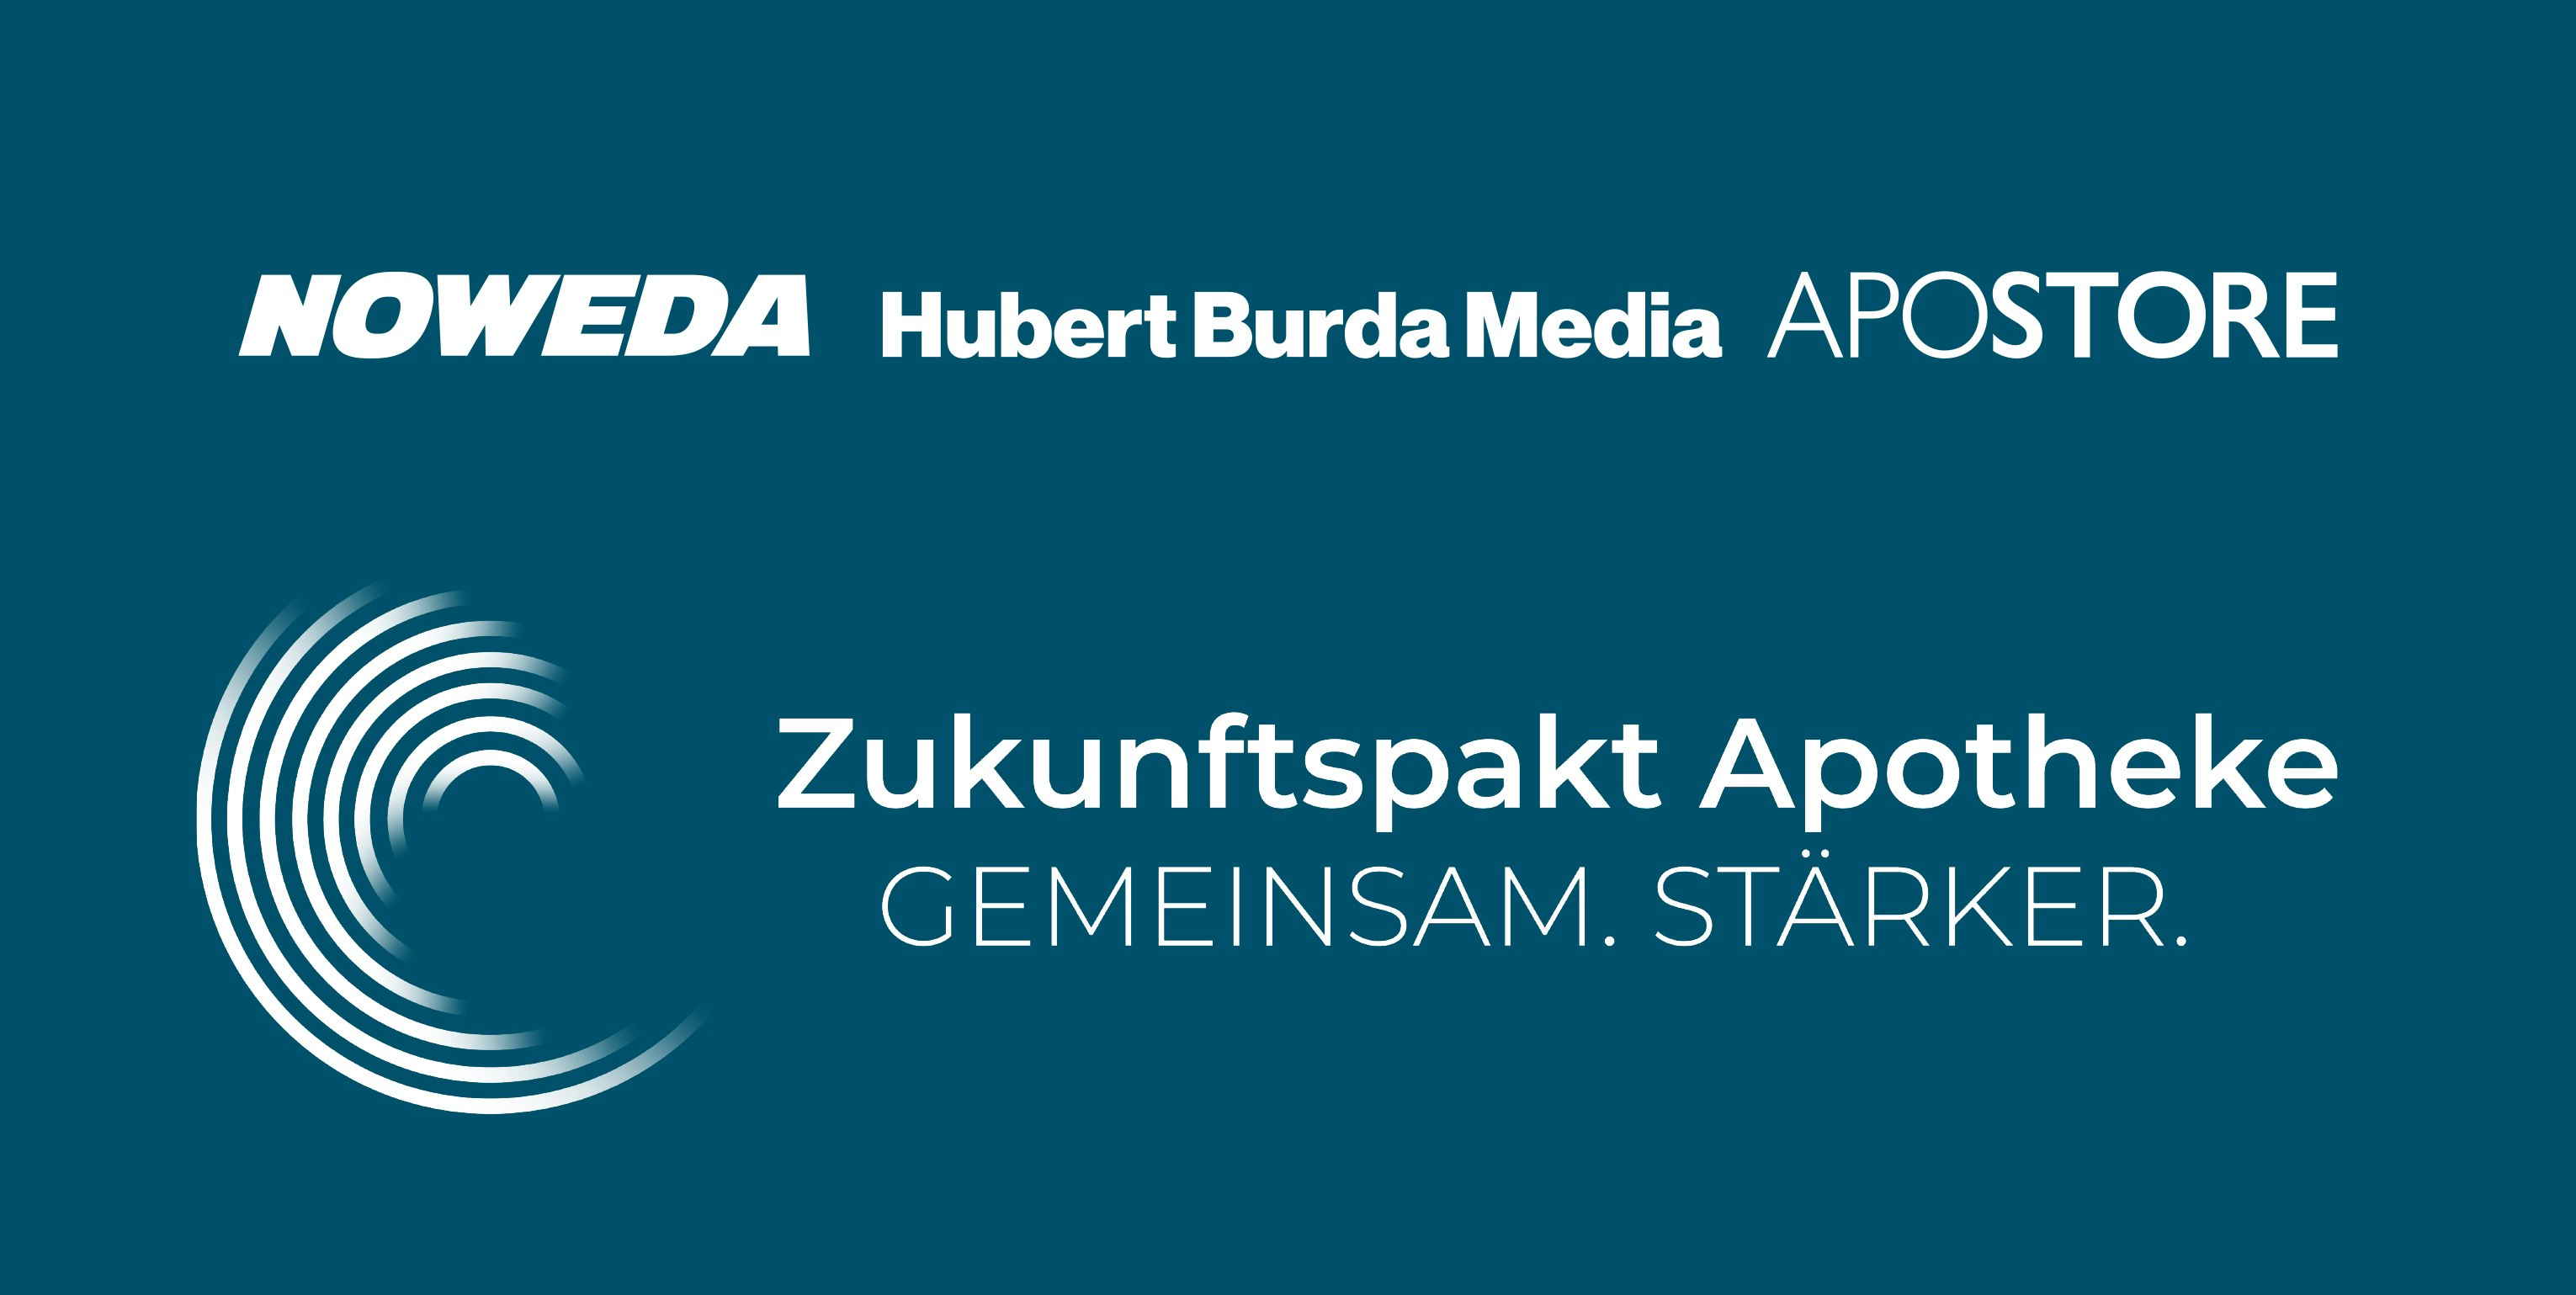 2019 09 24 Pressemitteilung Zukunftspakt Apotheke Noweda Hubert Burda Media Apostore Digitale Apotheke Header Image